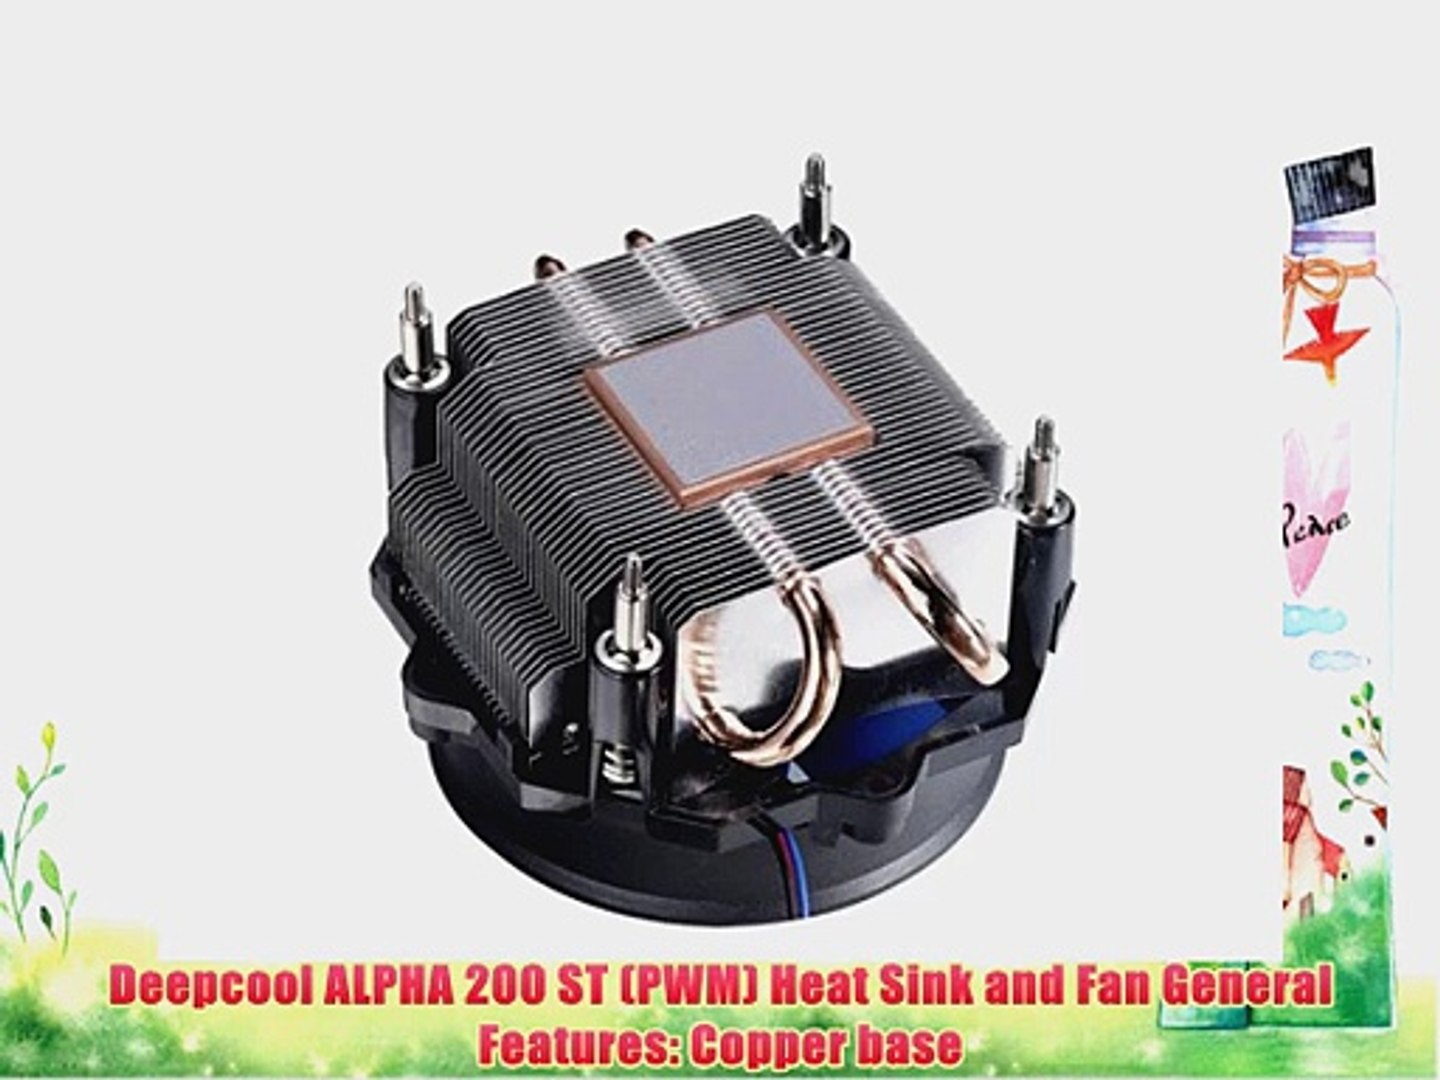 Deepcool Alpha 200 St Pwm Socket 775 Copper Base Aluminum Heat Sink